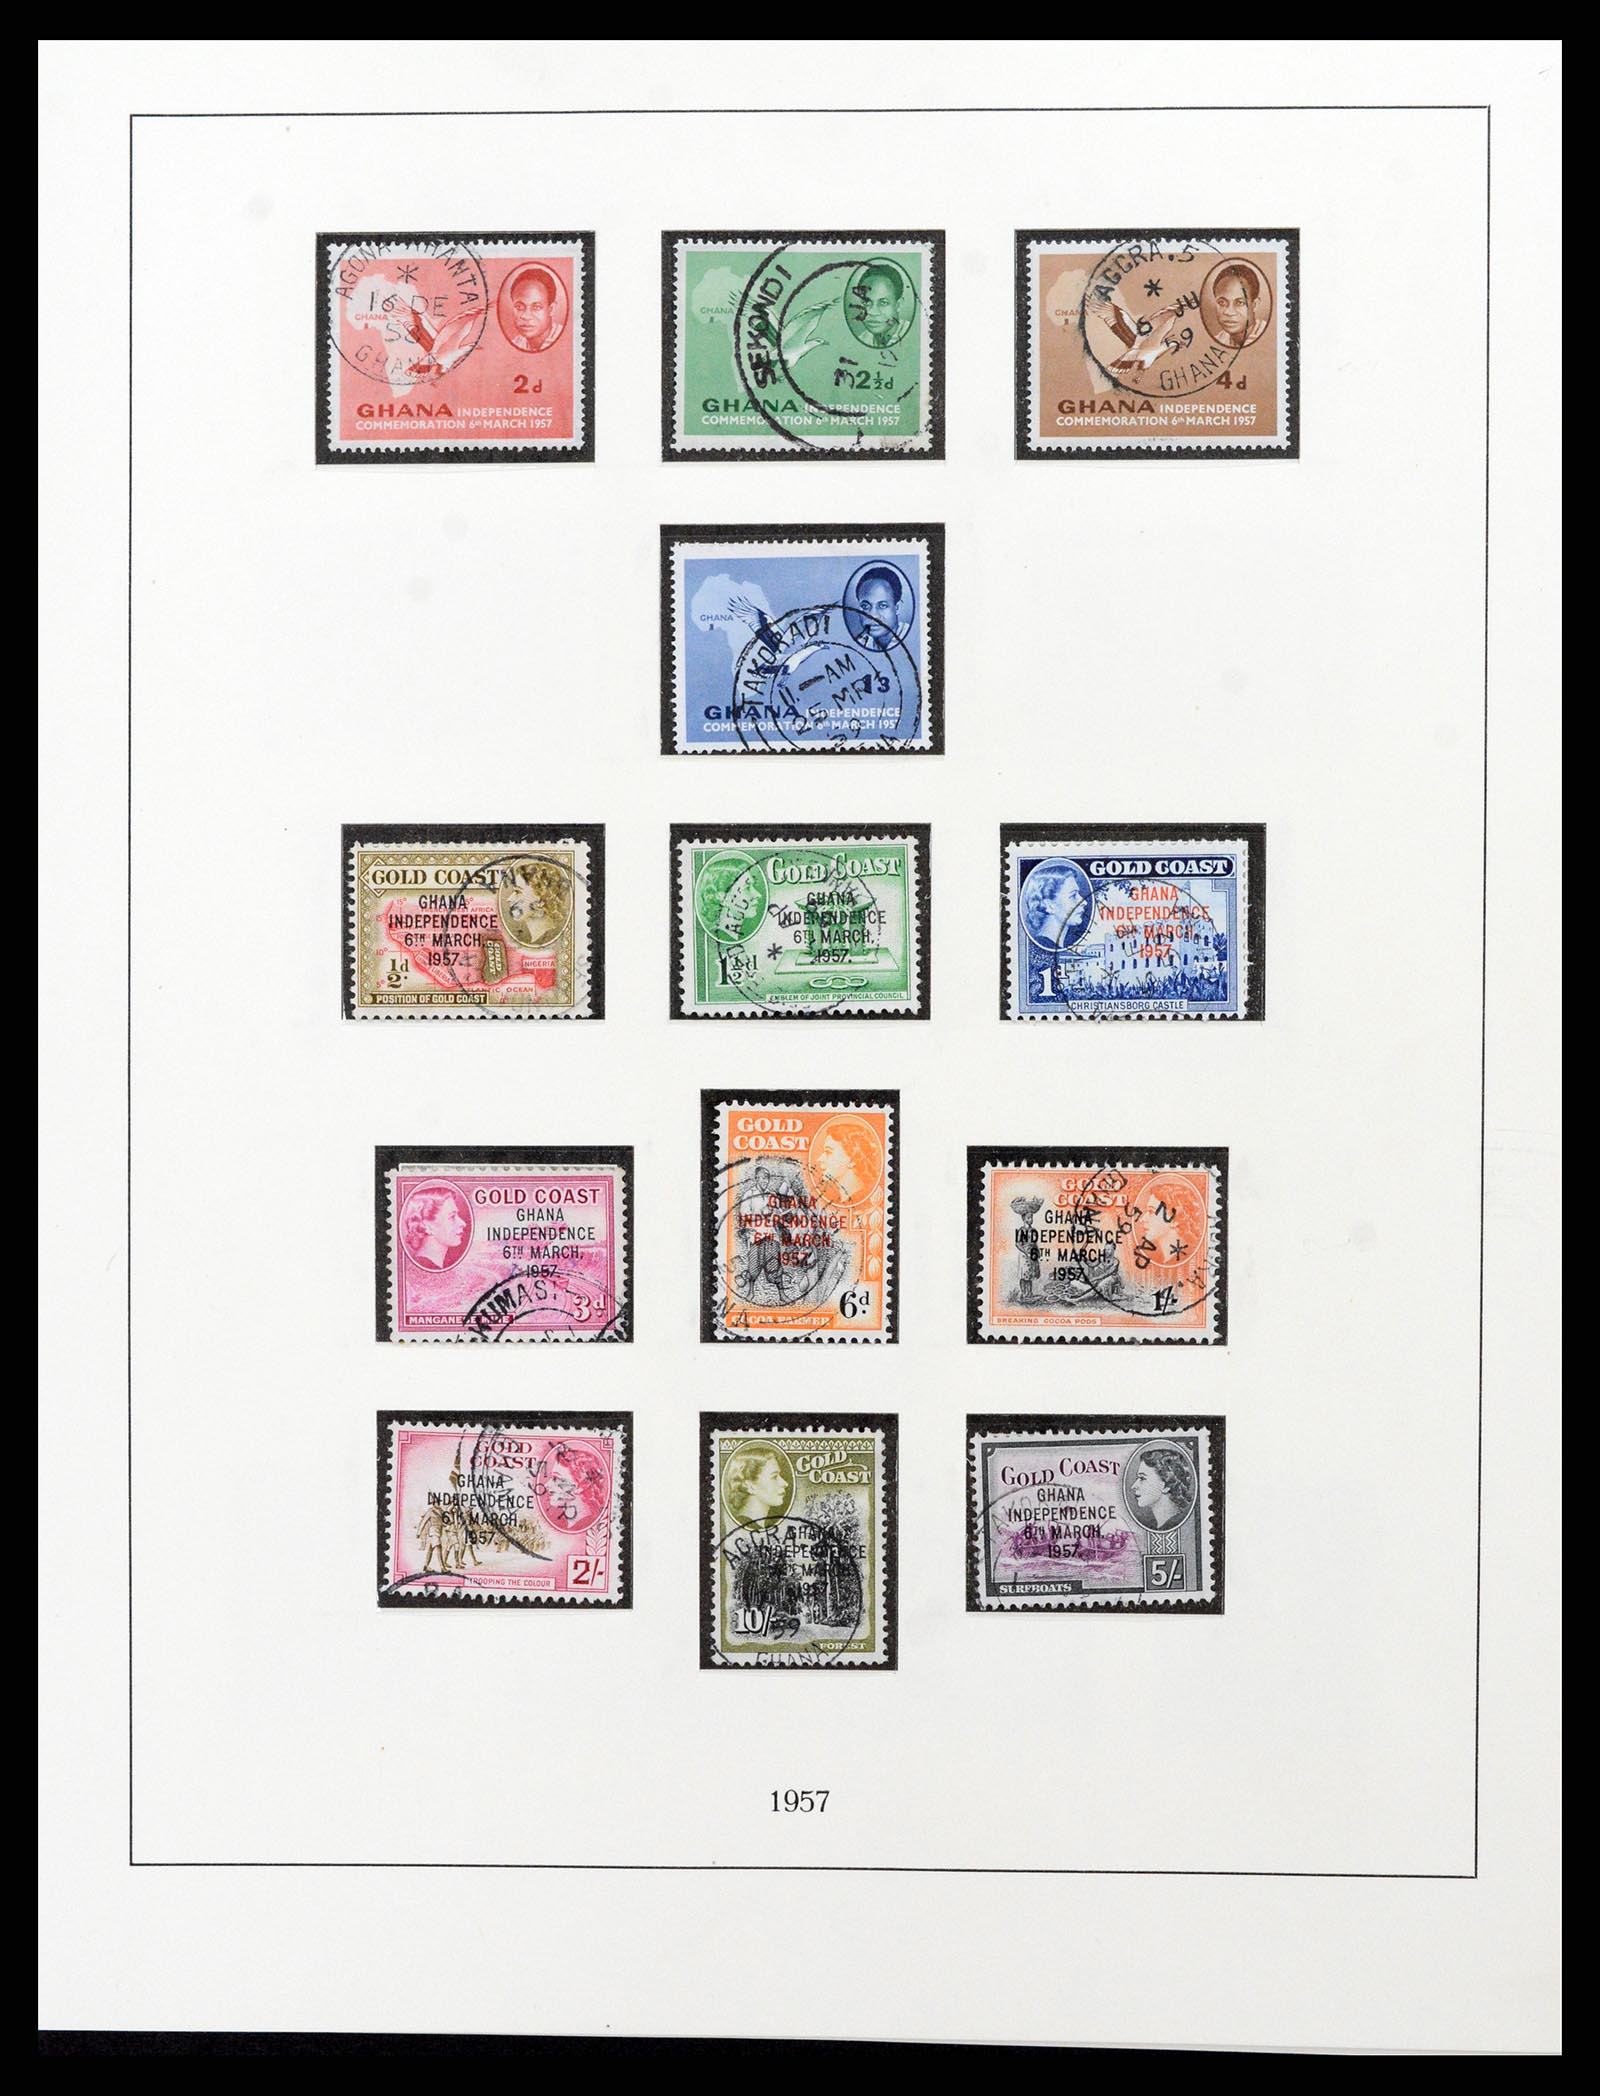 37584 001 - Stamp collection 37584 Ghana 1957-1972.